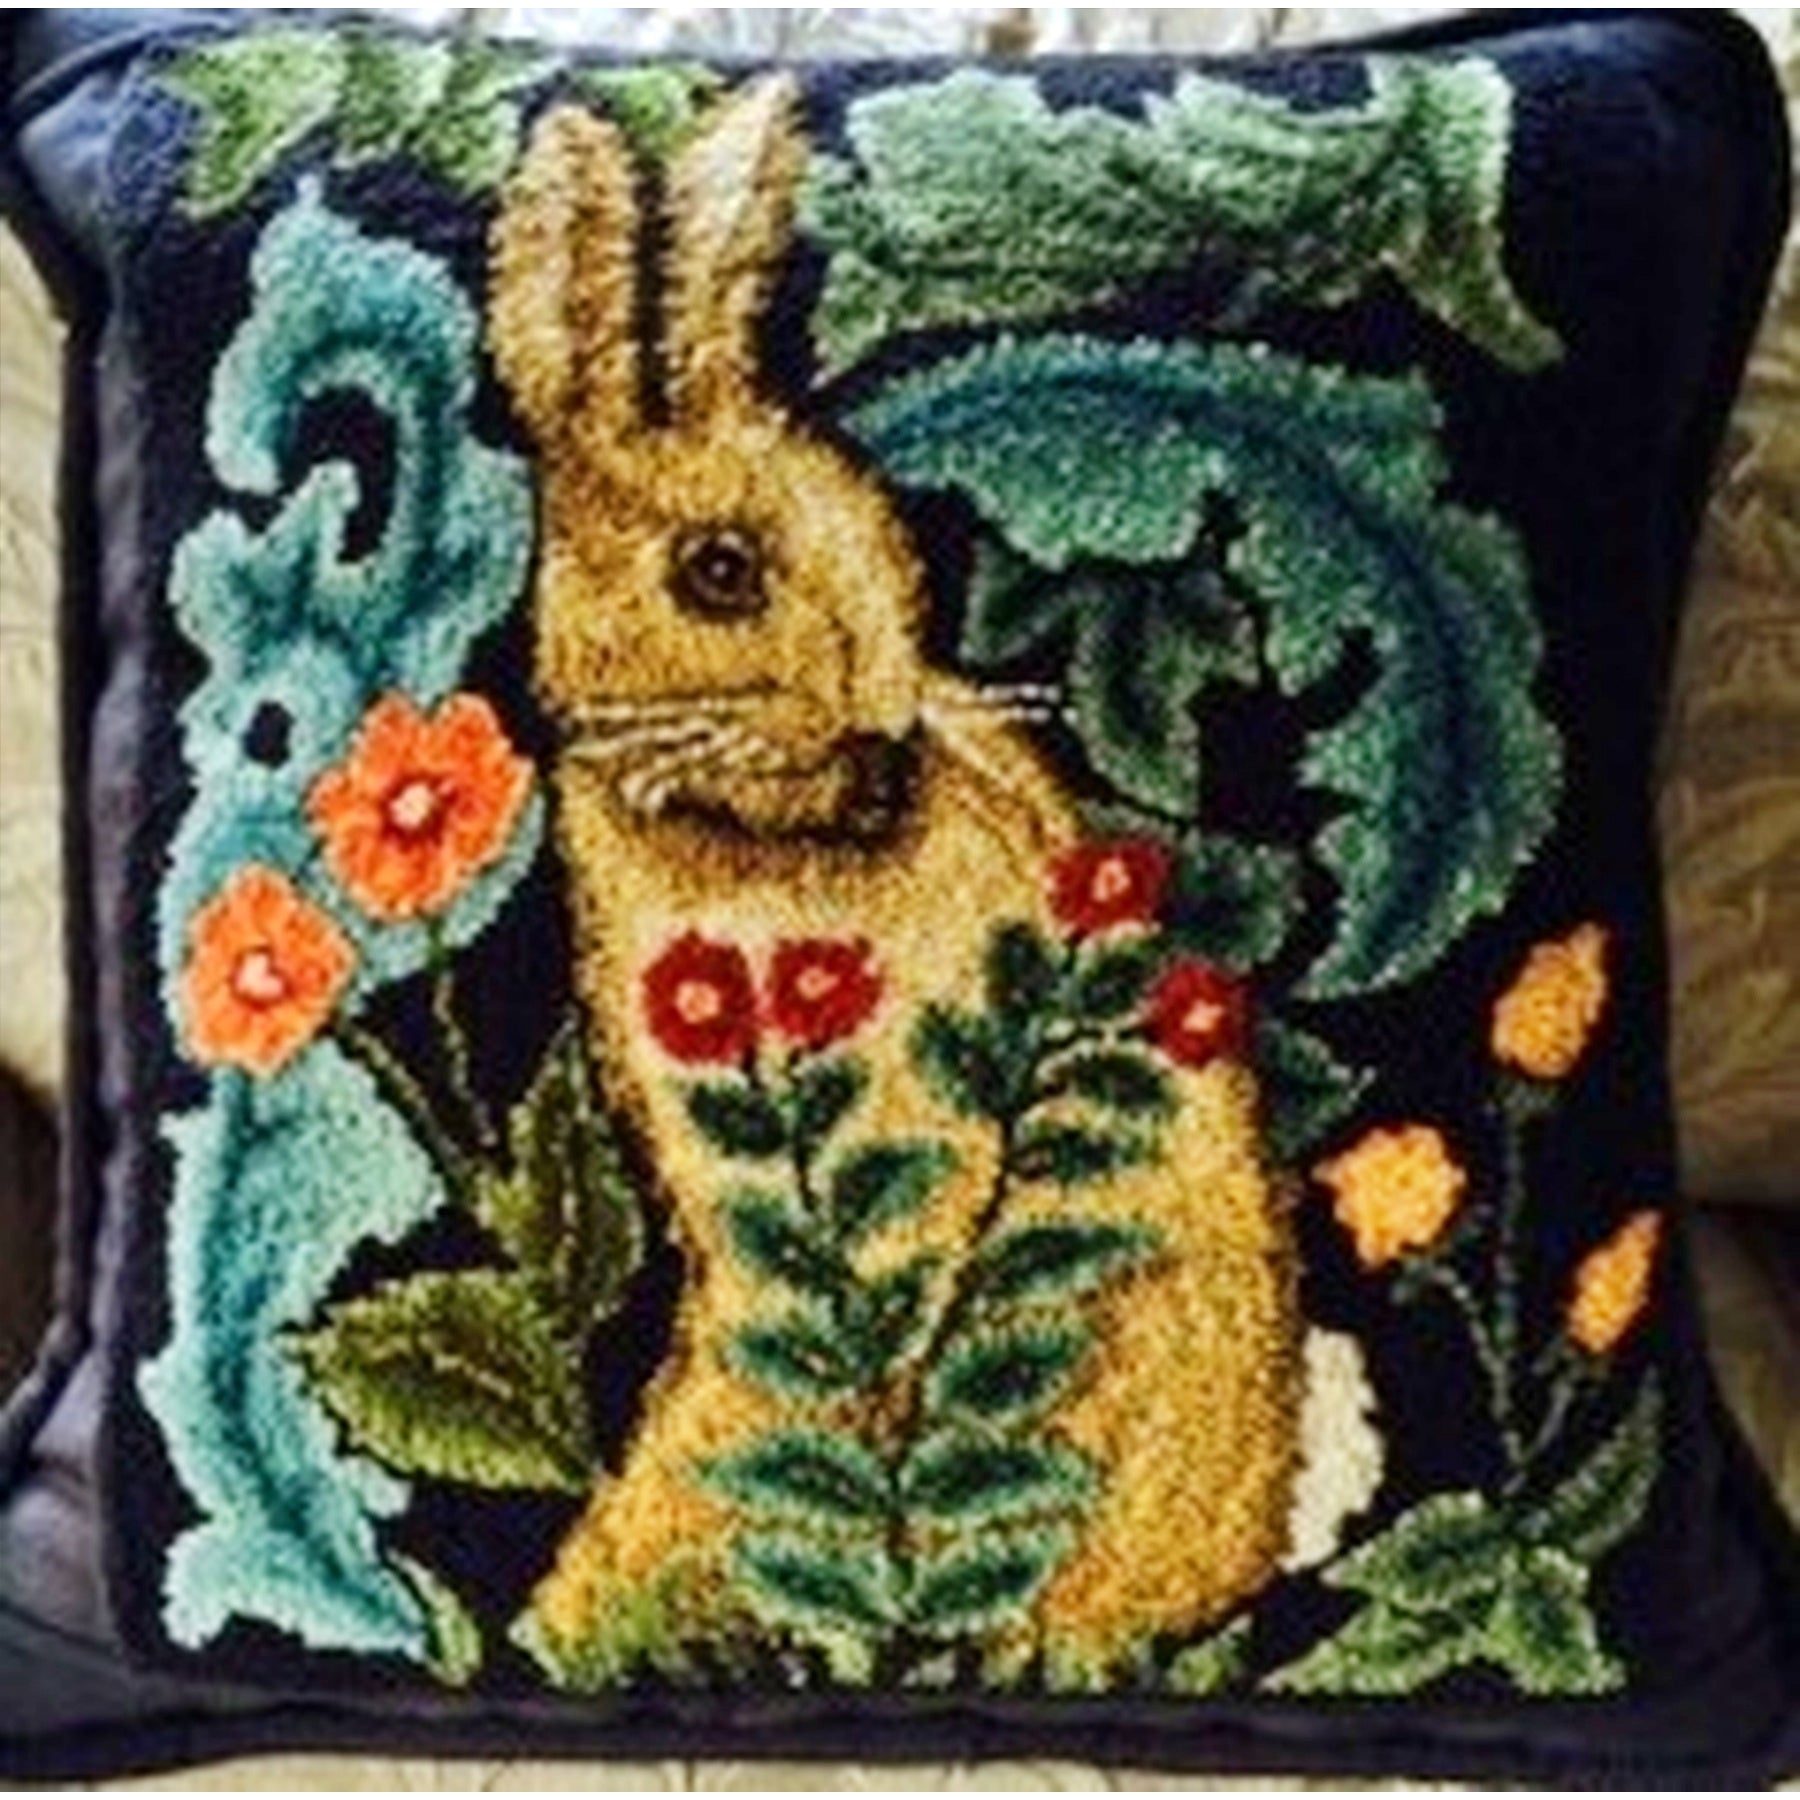 Morris Bunny, rug hooked by Sheila Stewart